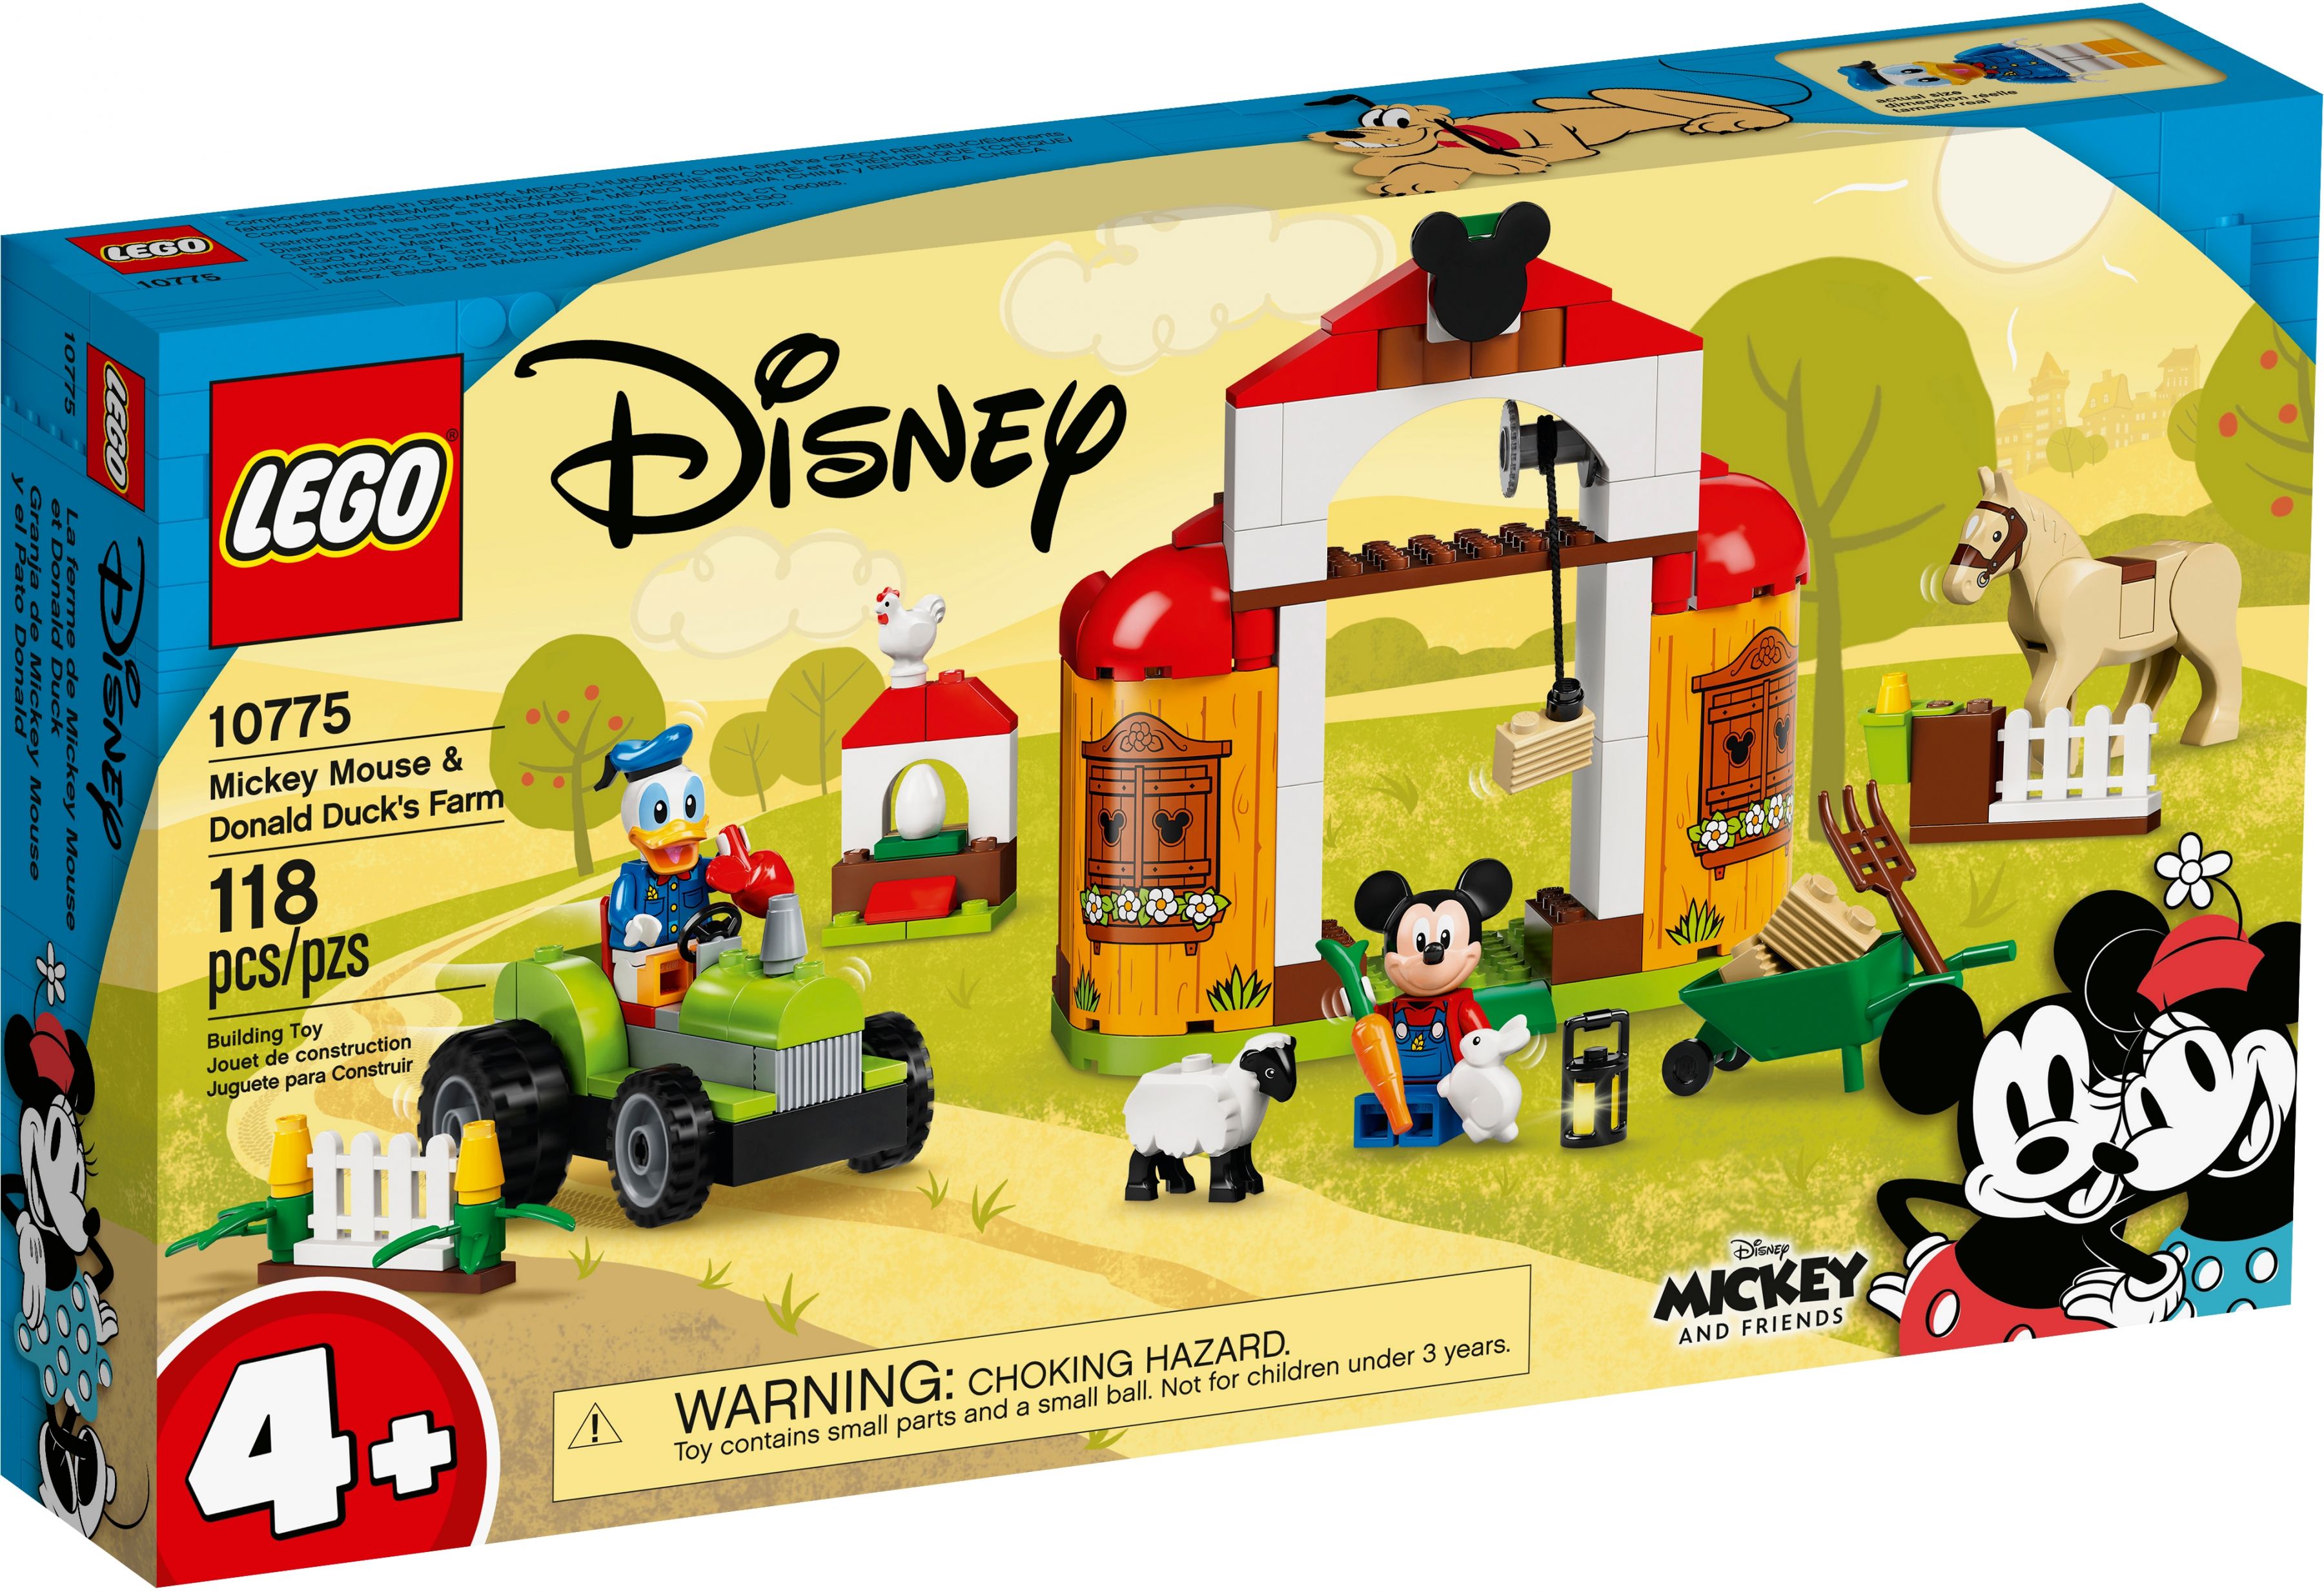 LEGO Disney 10775 Mickys und Donald Duck's Farm LEGO_10775_alt1.jpg